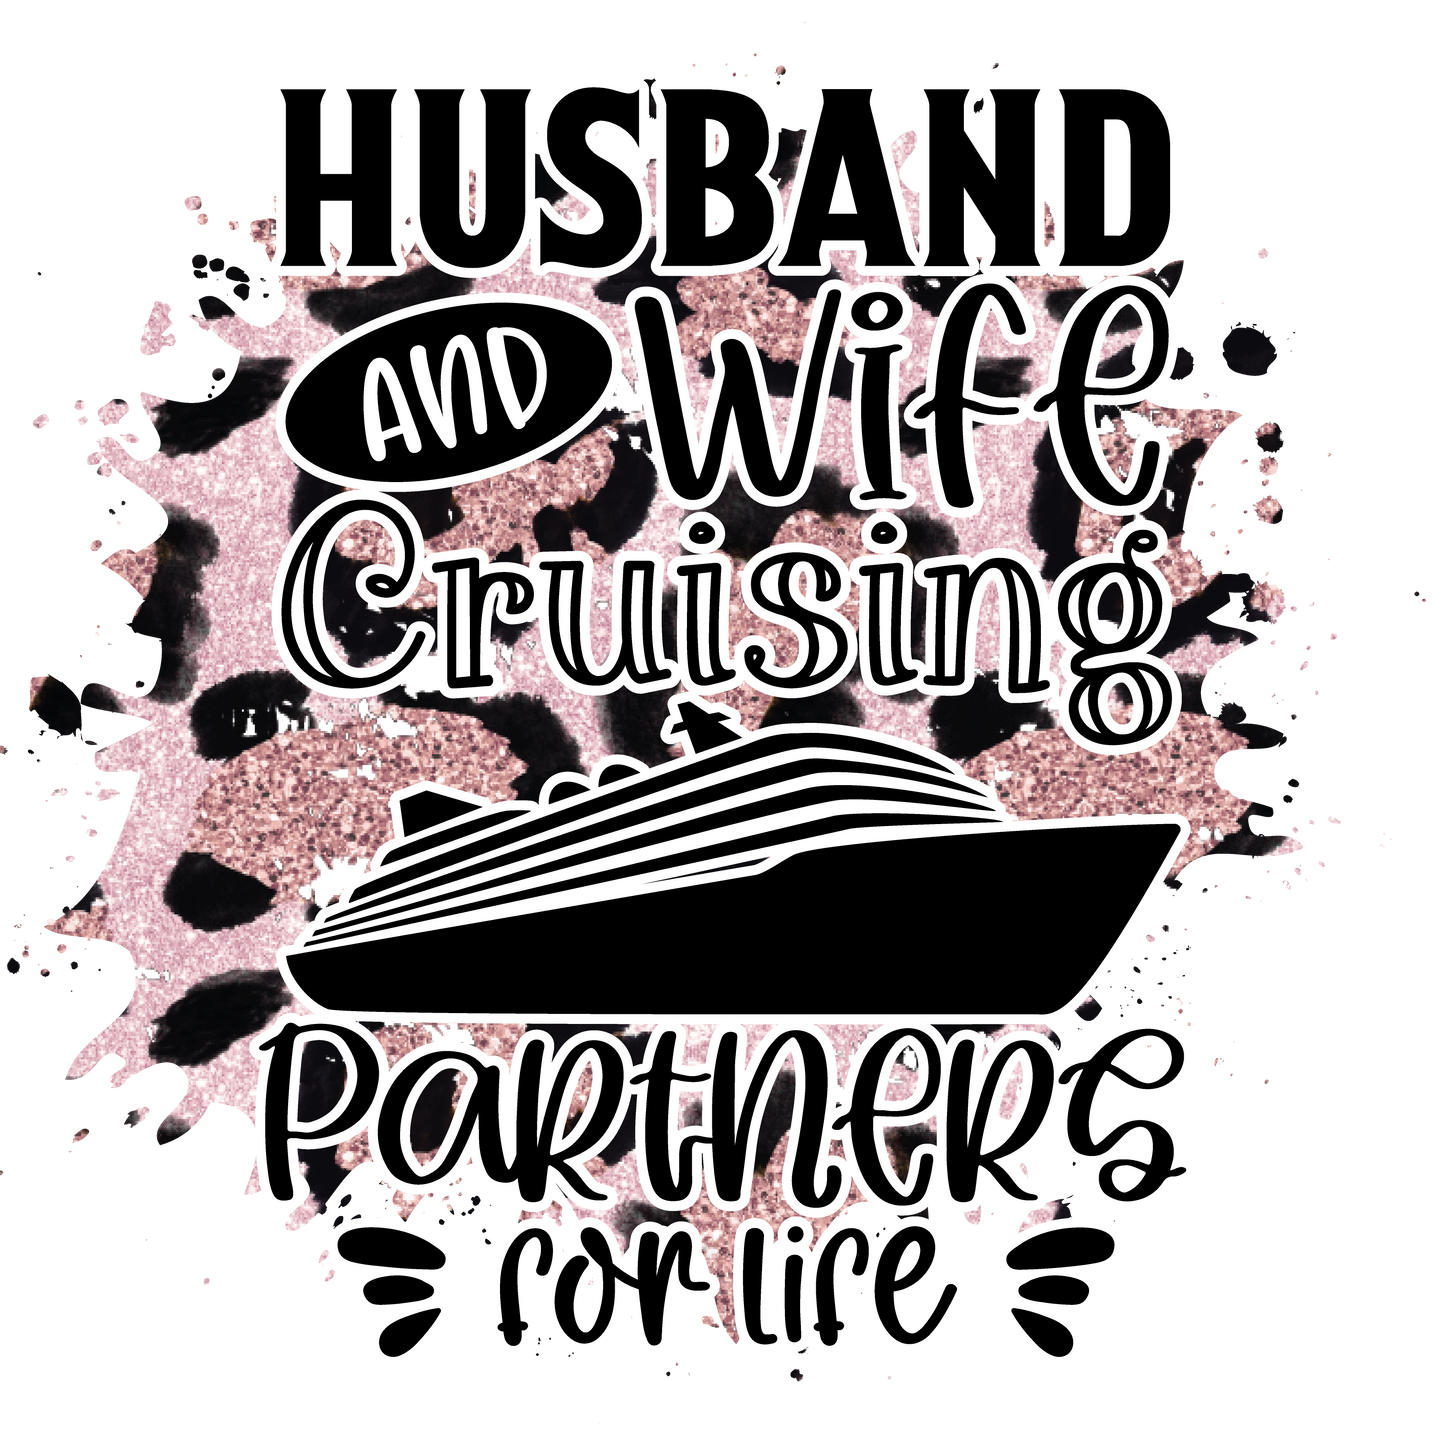 Husband Wife Cruising Partners for Life